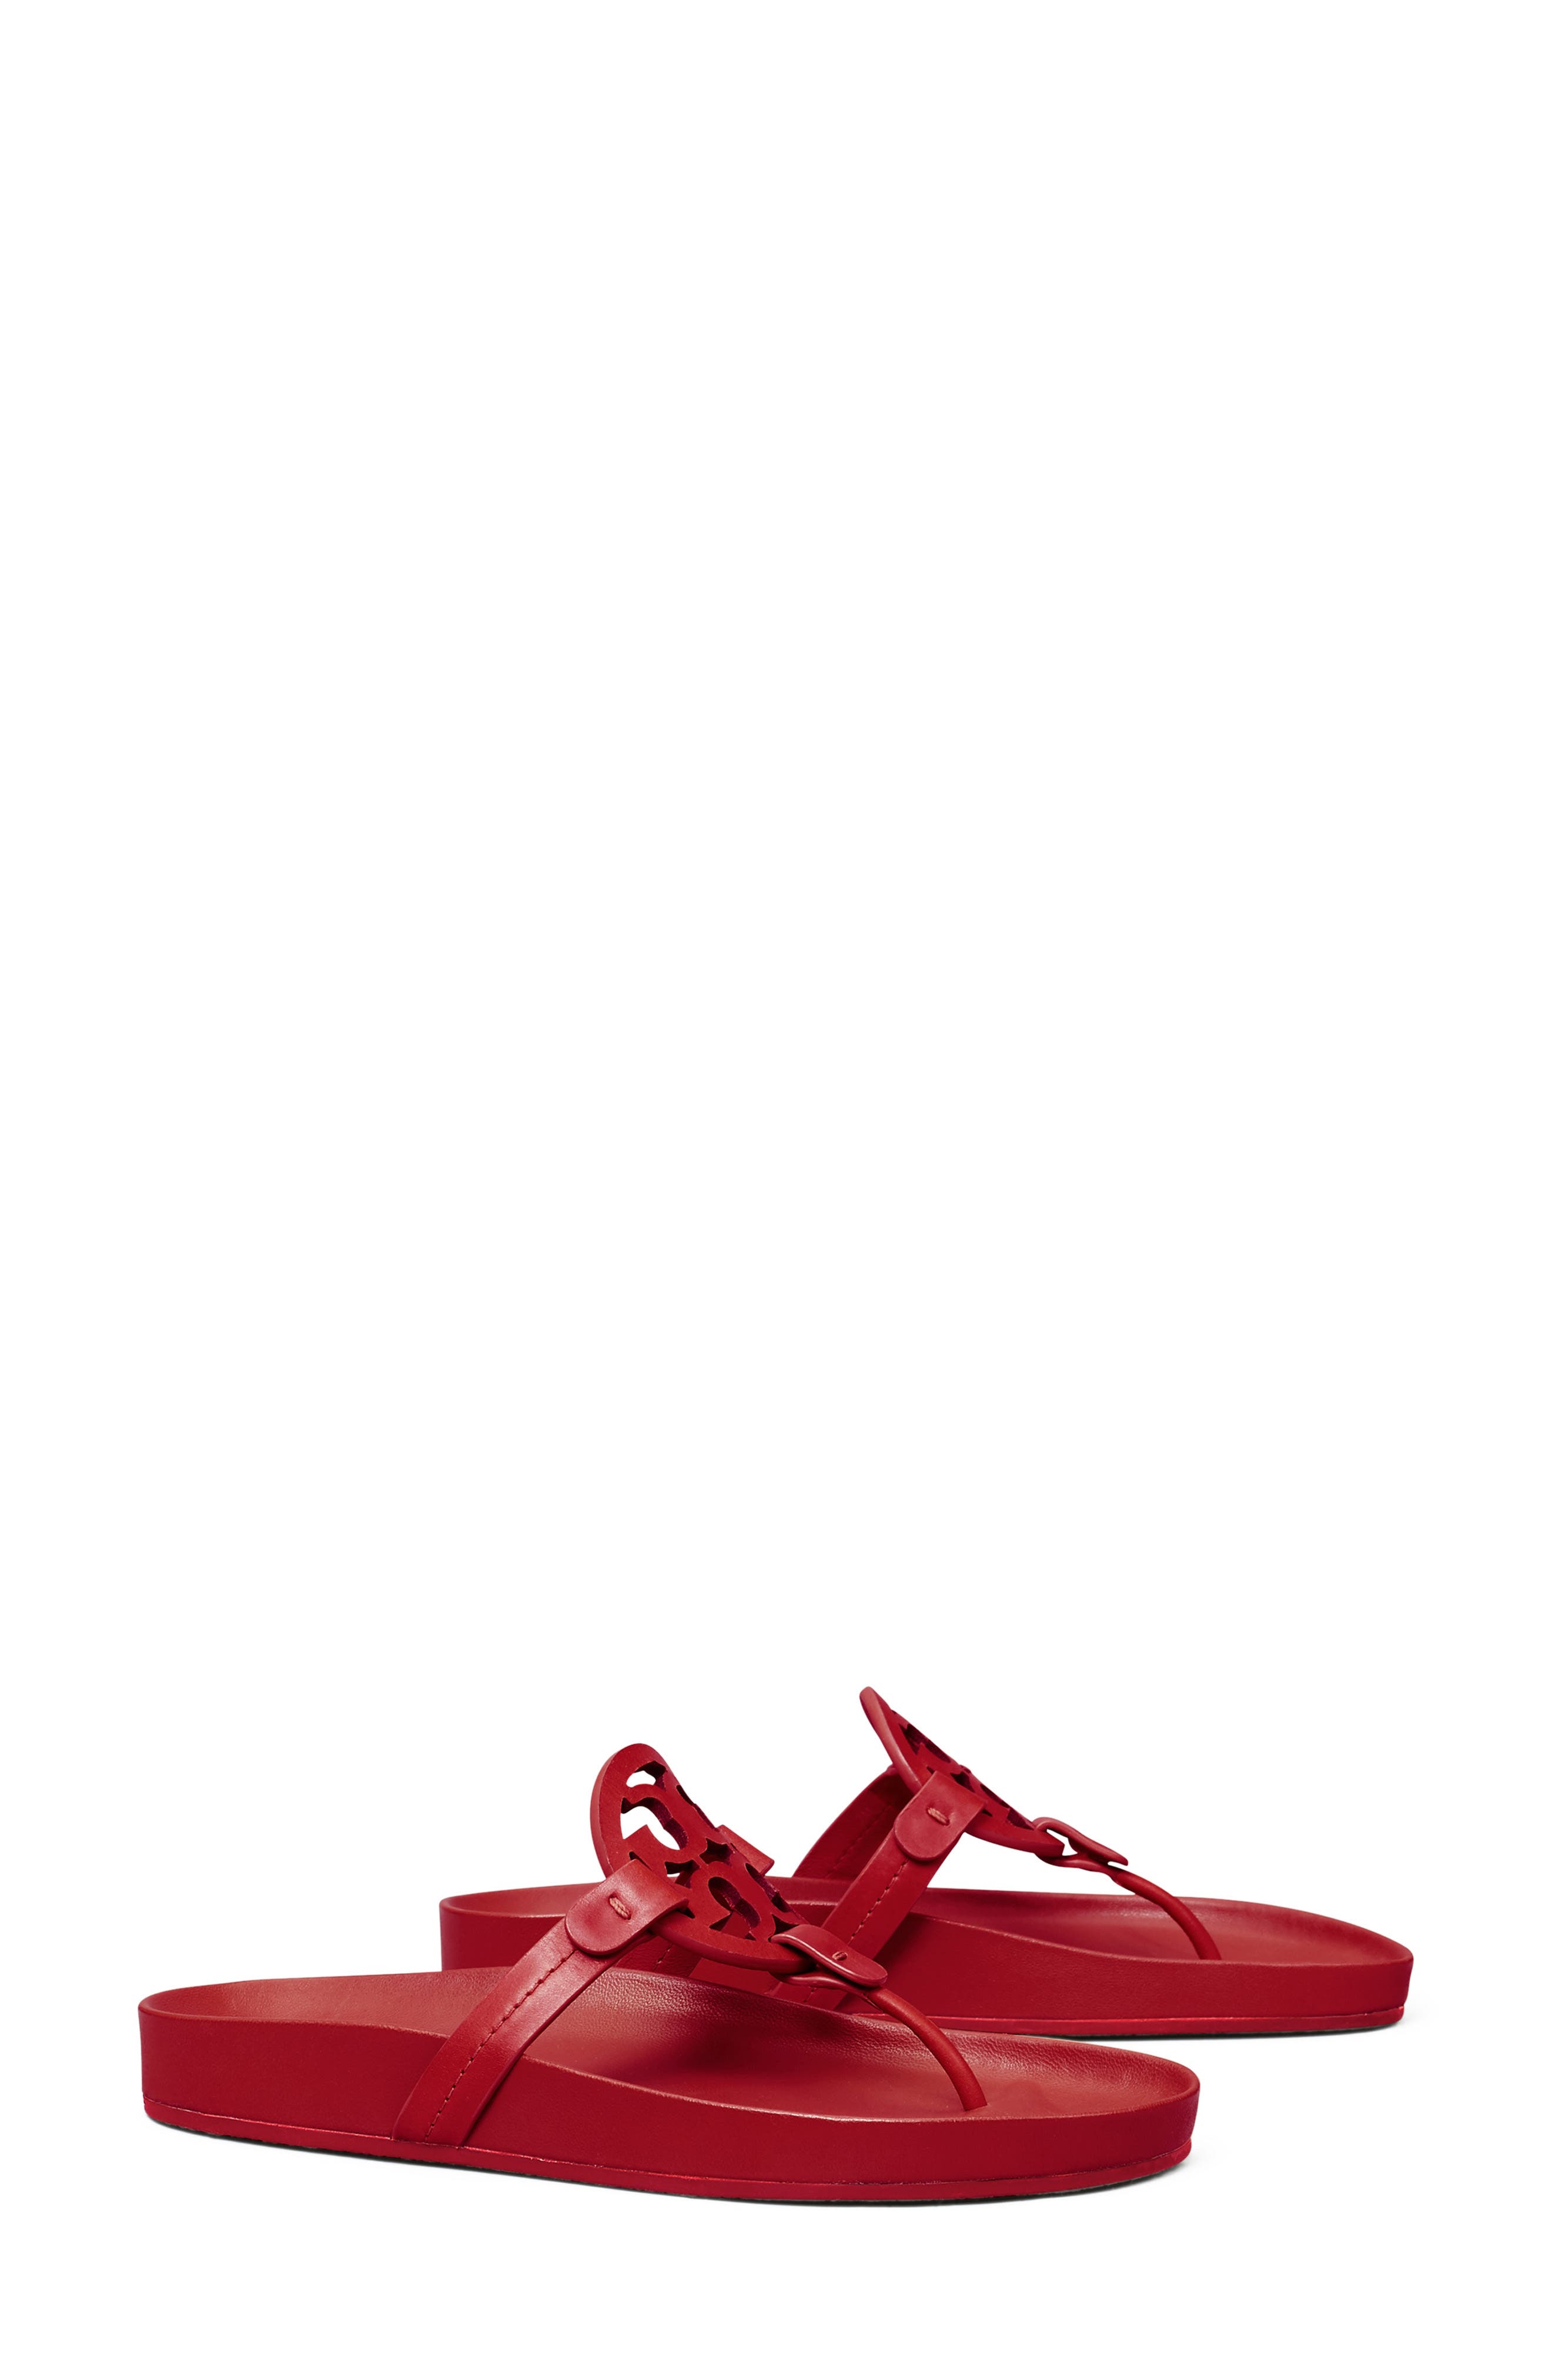 5.5 M US Toddler, Red 【Dream Studio】Girls Genuine Leather Solid Flower Sandals 